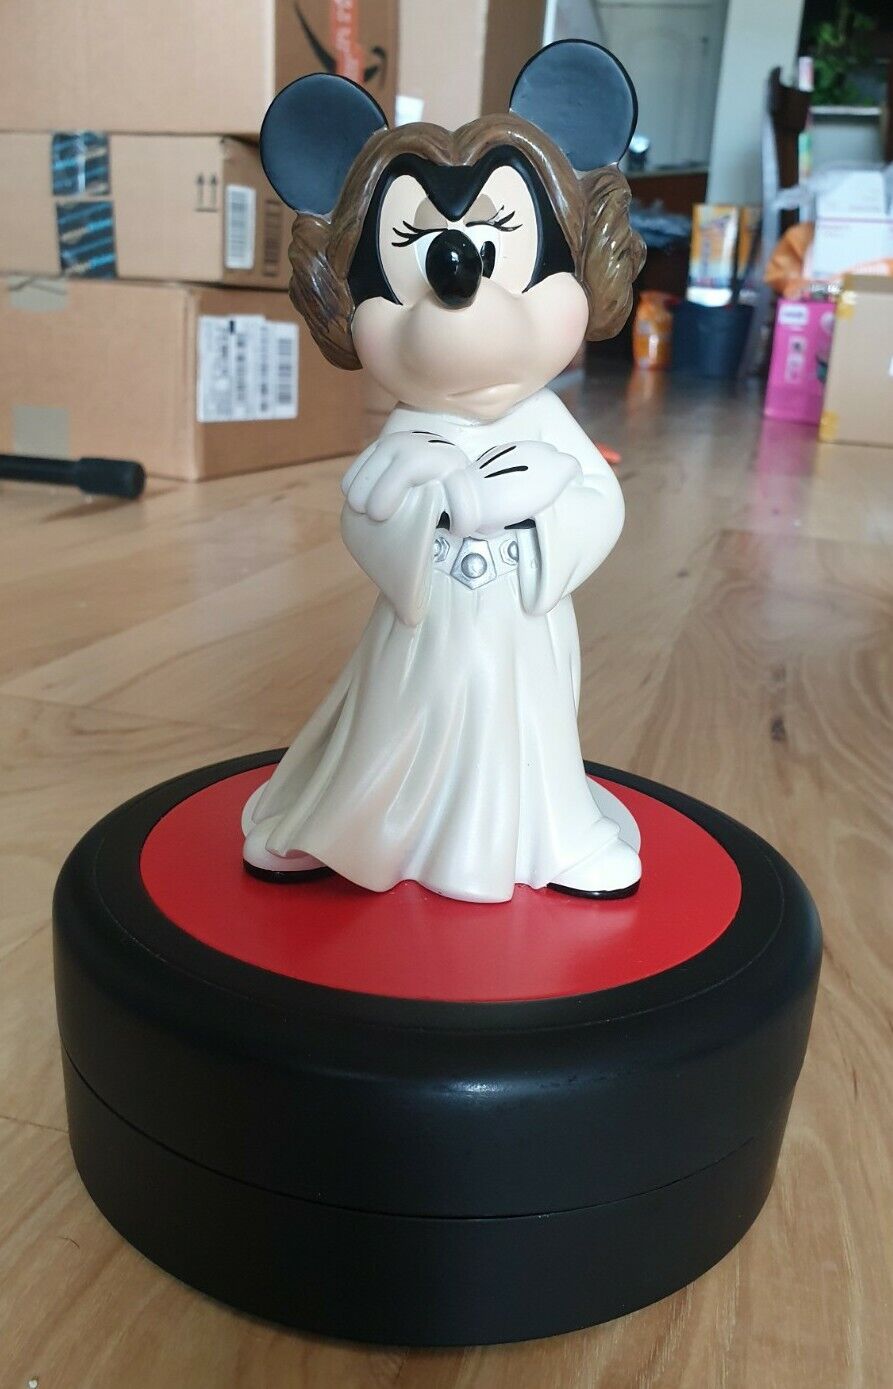 Disney: Star Wars Weekends - Minnie Mouse Leia Figurine by Costa Alavezos (2011)